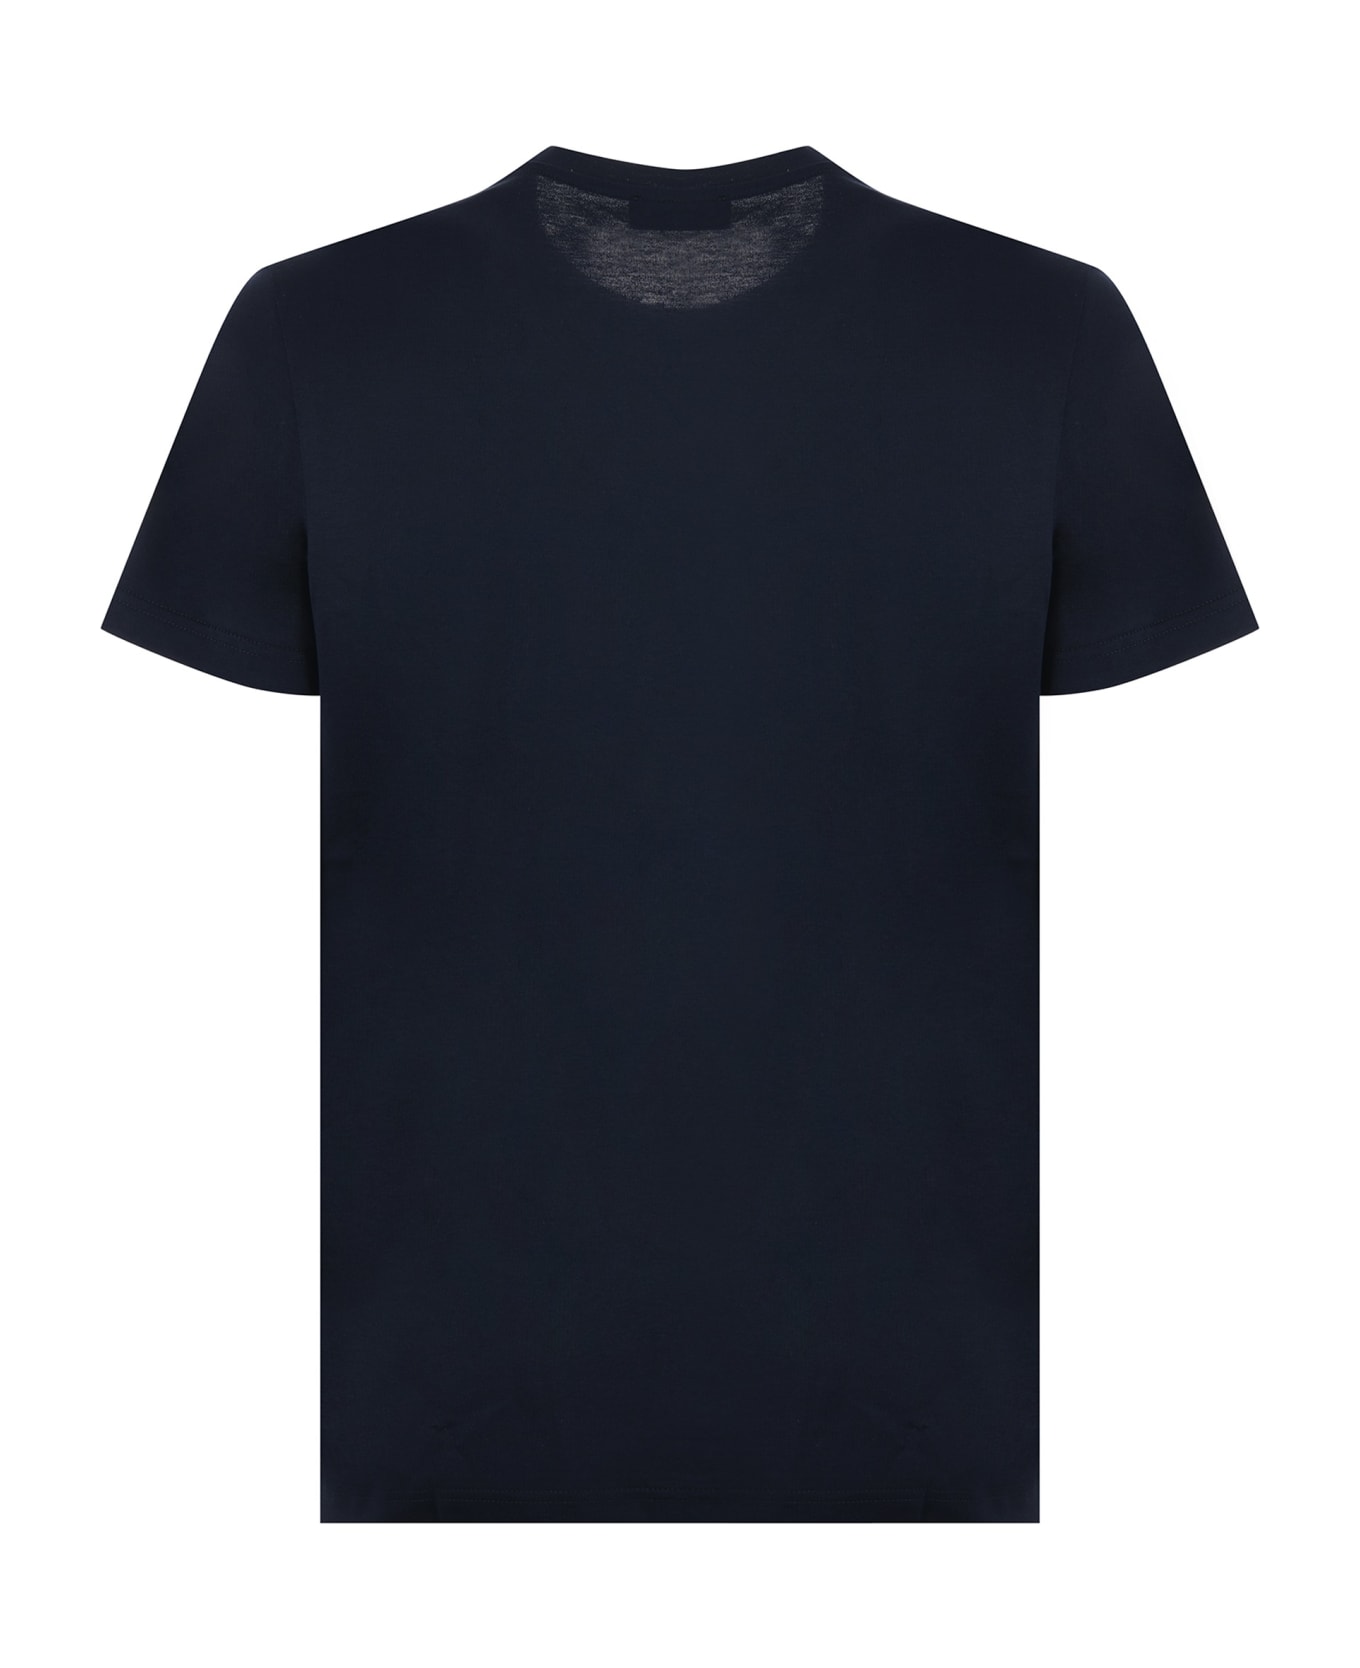 Dondup Cotton T-shirt - Blu scuro